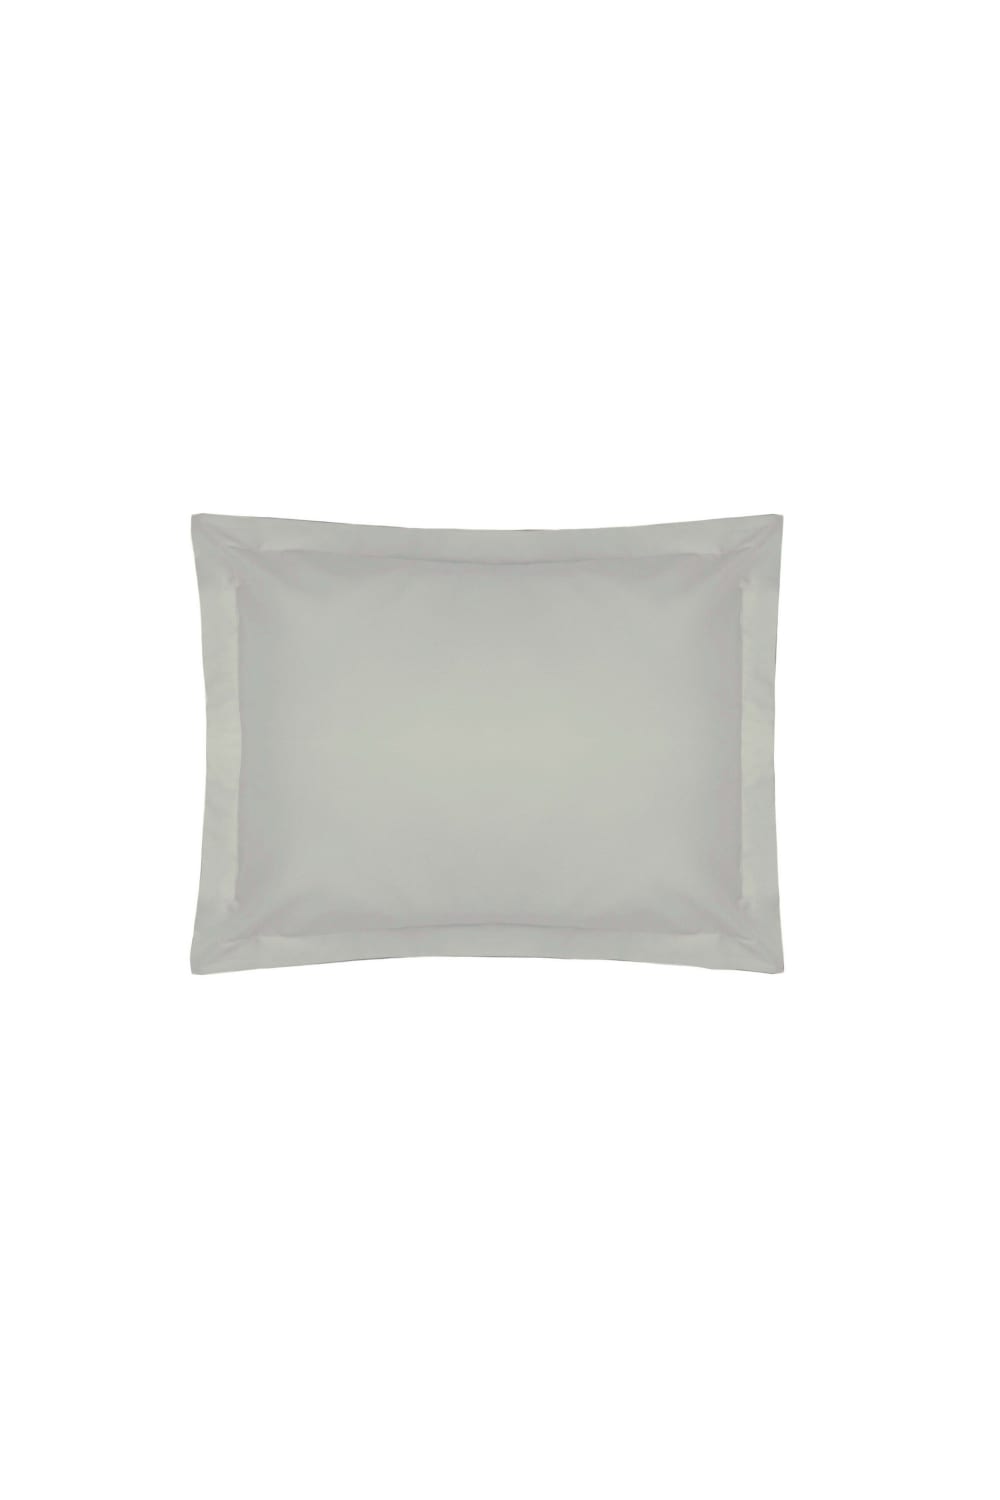 Belledorm 200 Thread Count Egyptian Cotton Oxford Pillowcase (Platinum) (One Size)